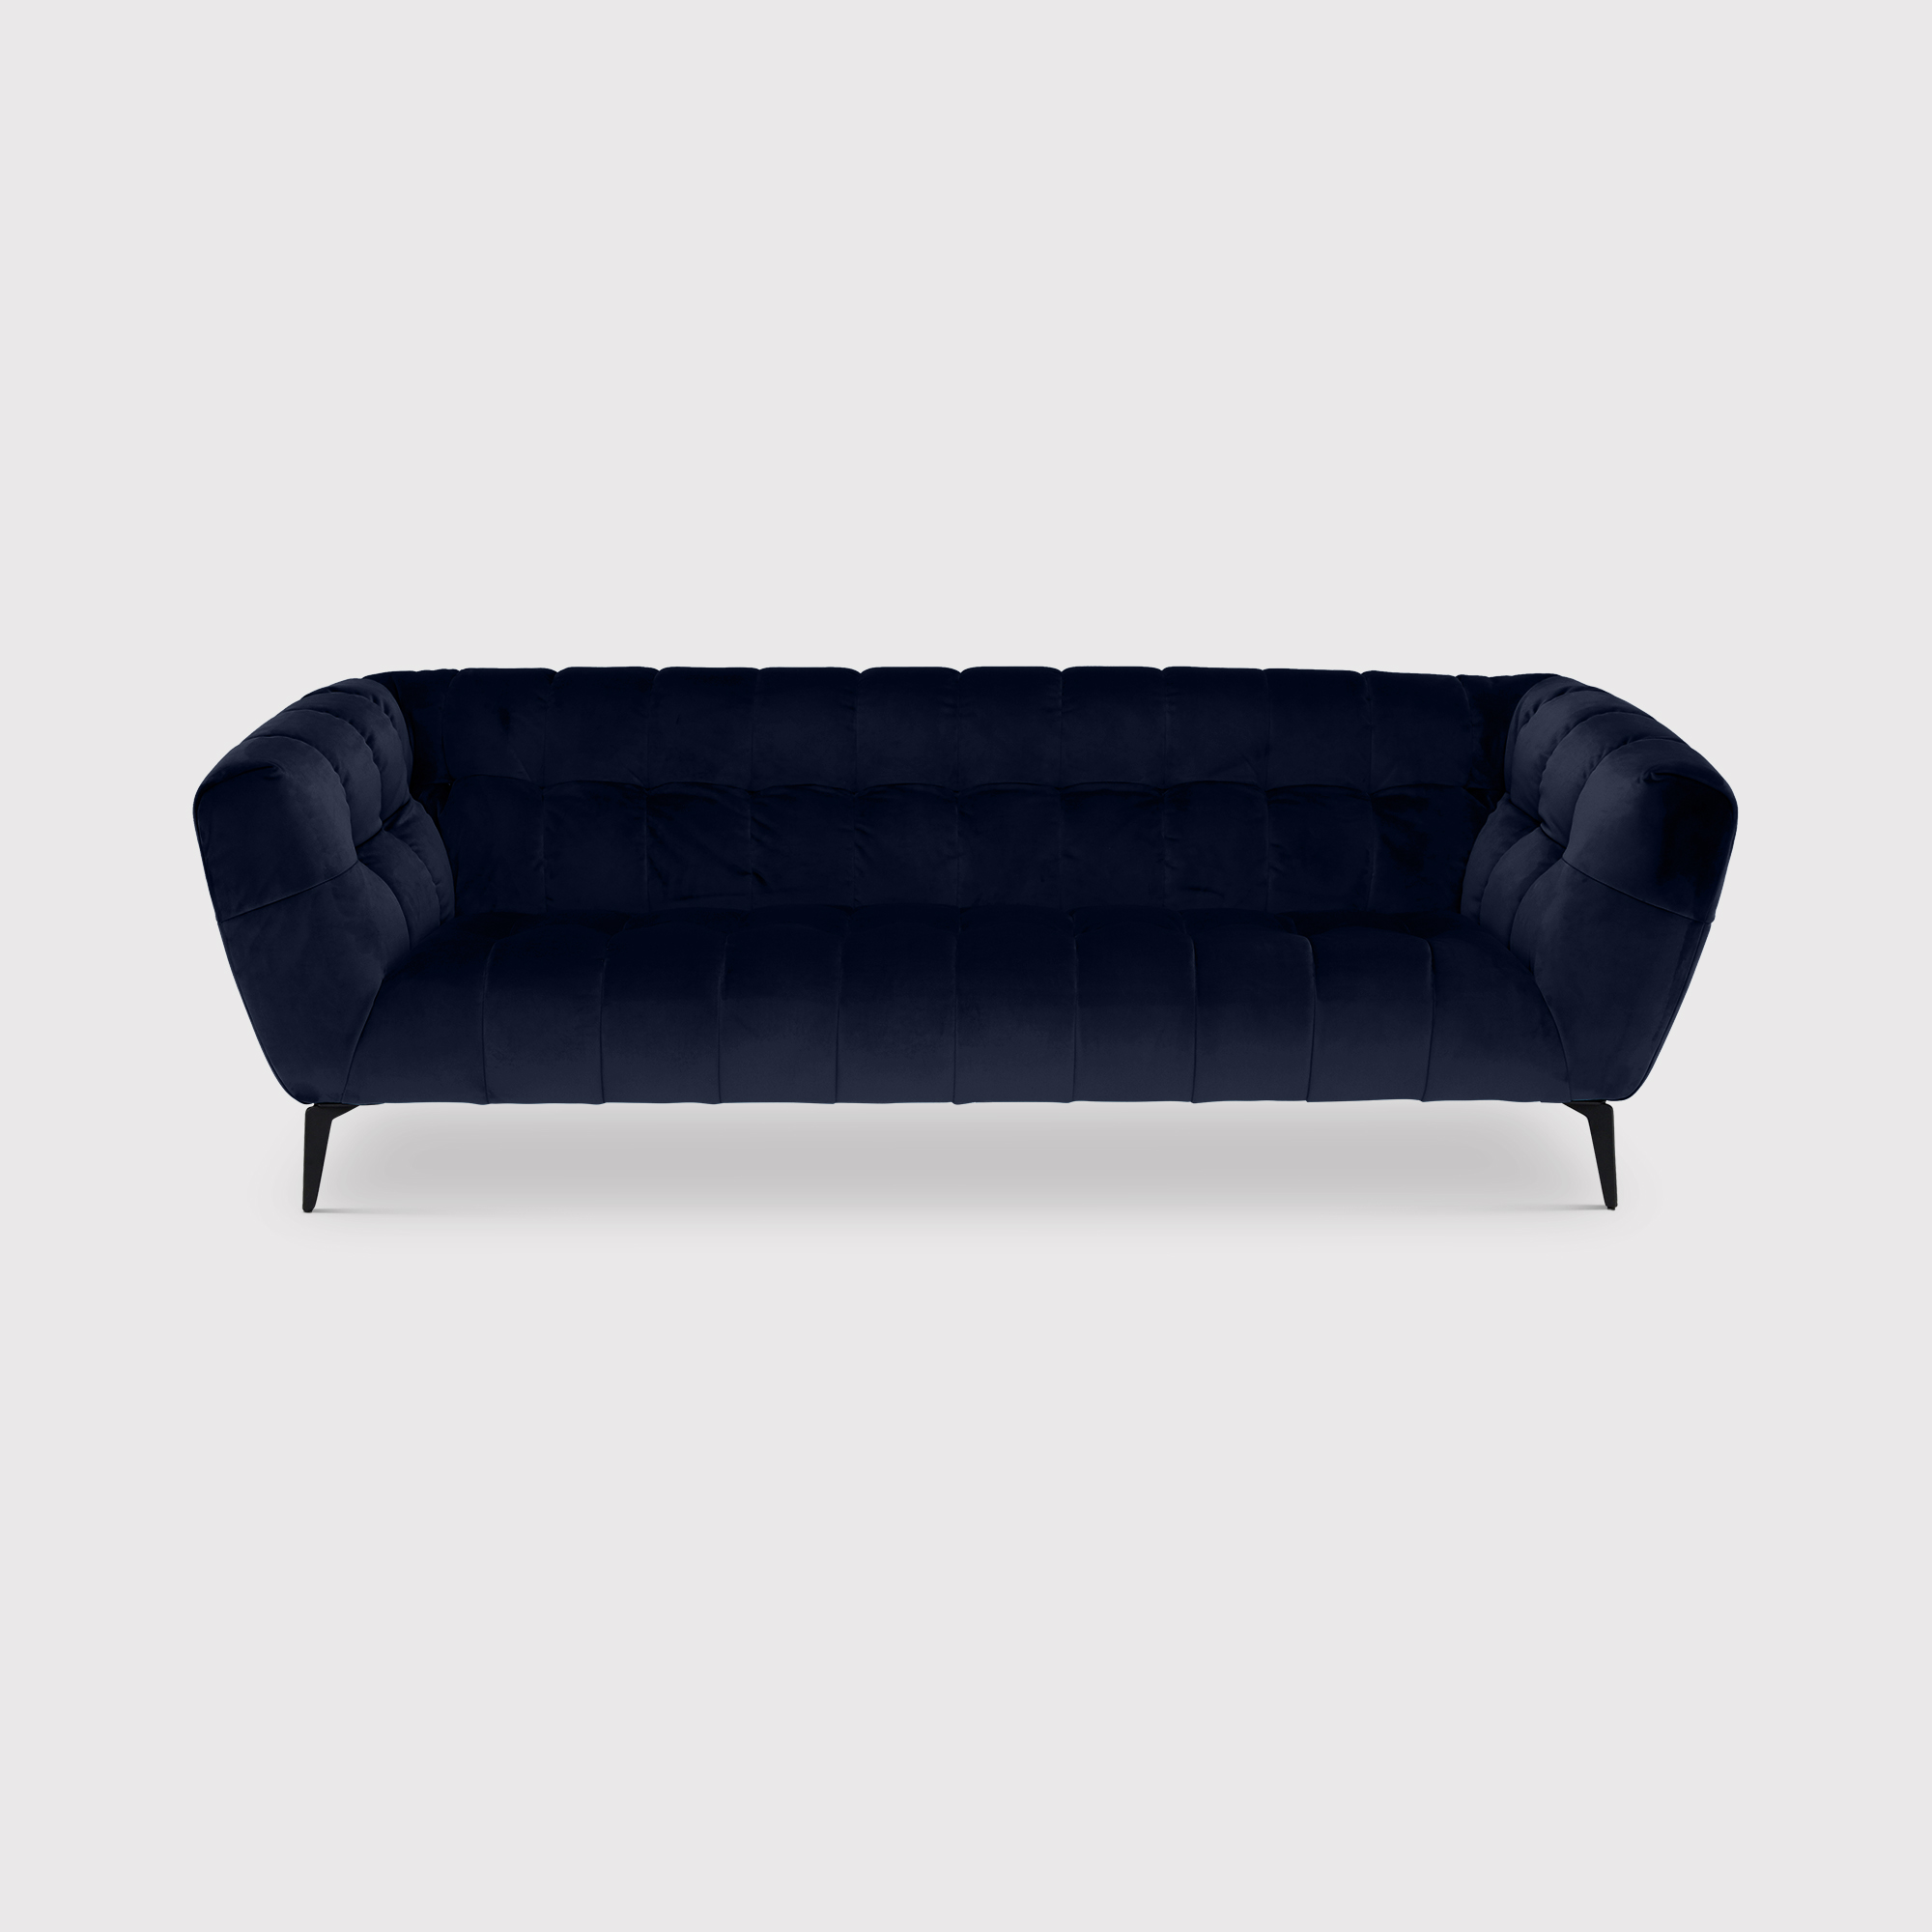 Azalea 3 Seater Sofa, Blue Fabric | Barker & Stonehouse